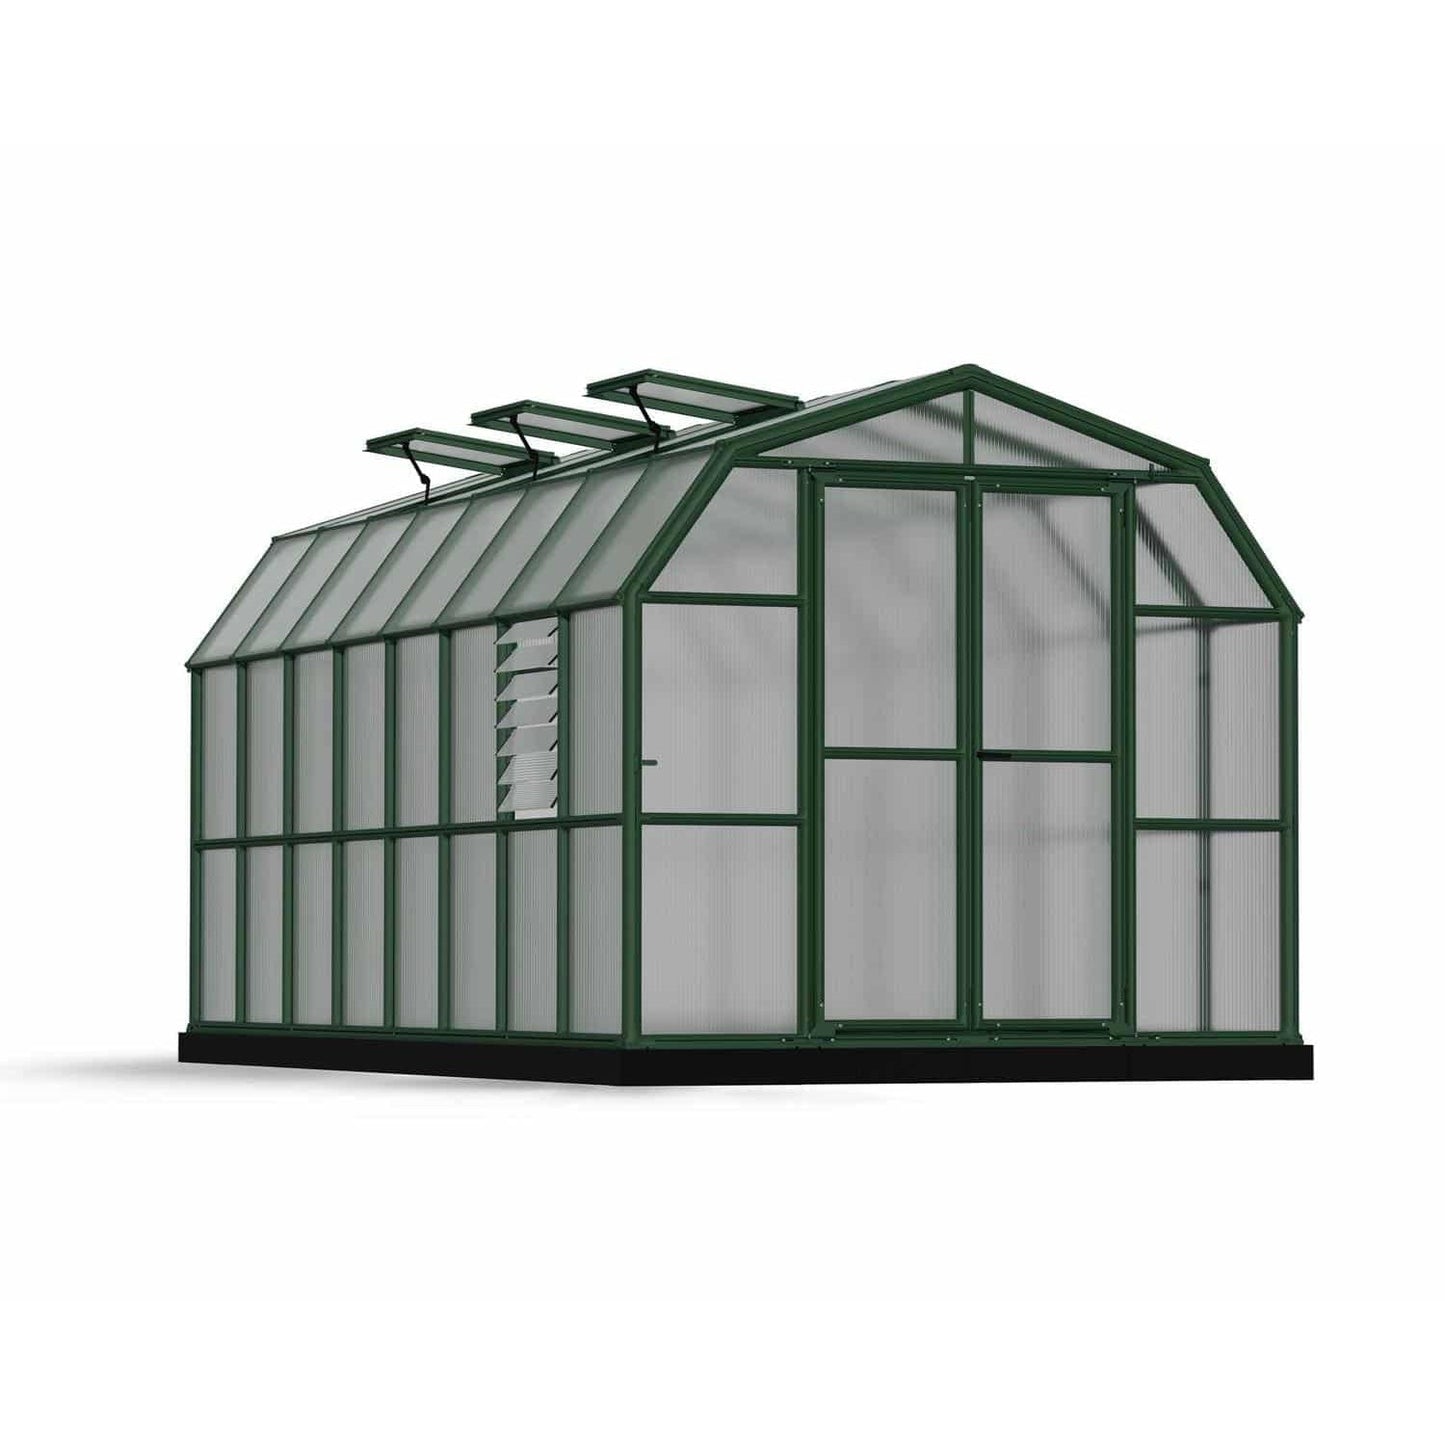 Rion Prestige Greenhouse 8 x 16 ft. - Delightful Yard